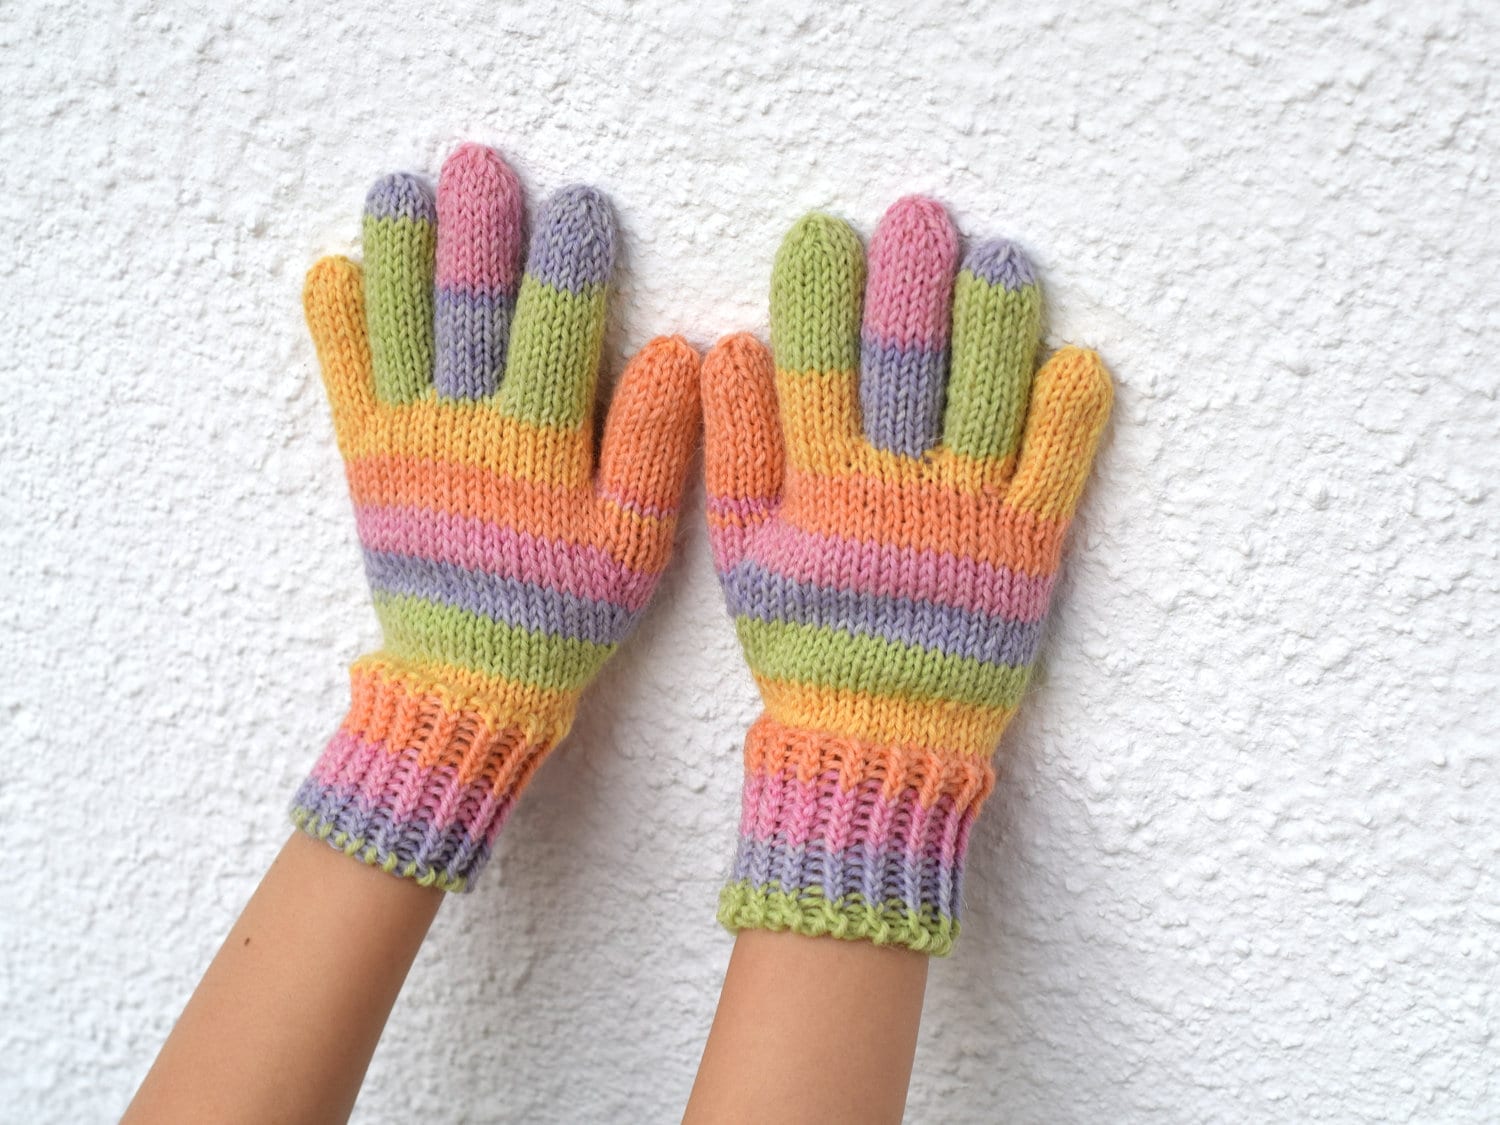 Kinder Leichte Regenbogen Handschuhe, Gestreifte 75% Wolle Winterhandschuhe, Damenhandschuhe Auf Bestellung, Candy Colors Handschuhe von TinyOrchids